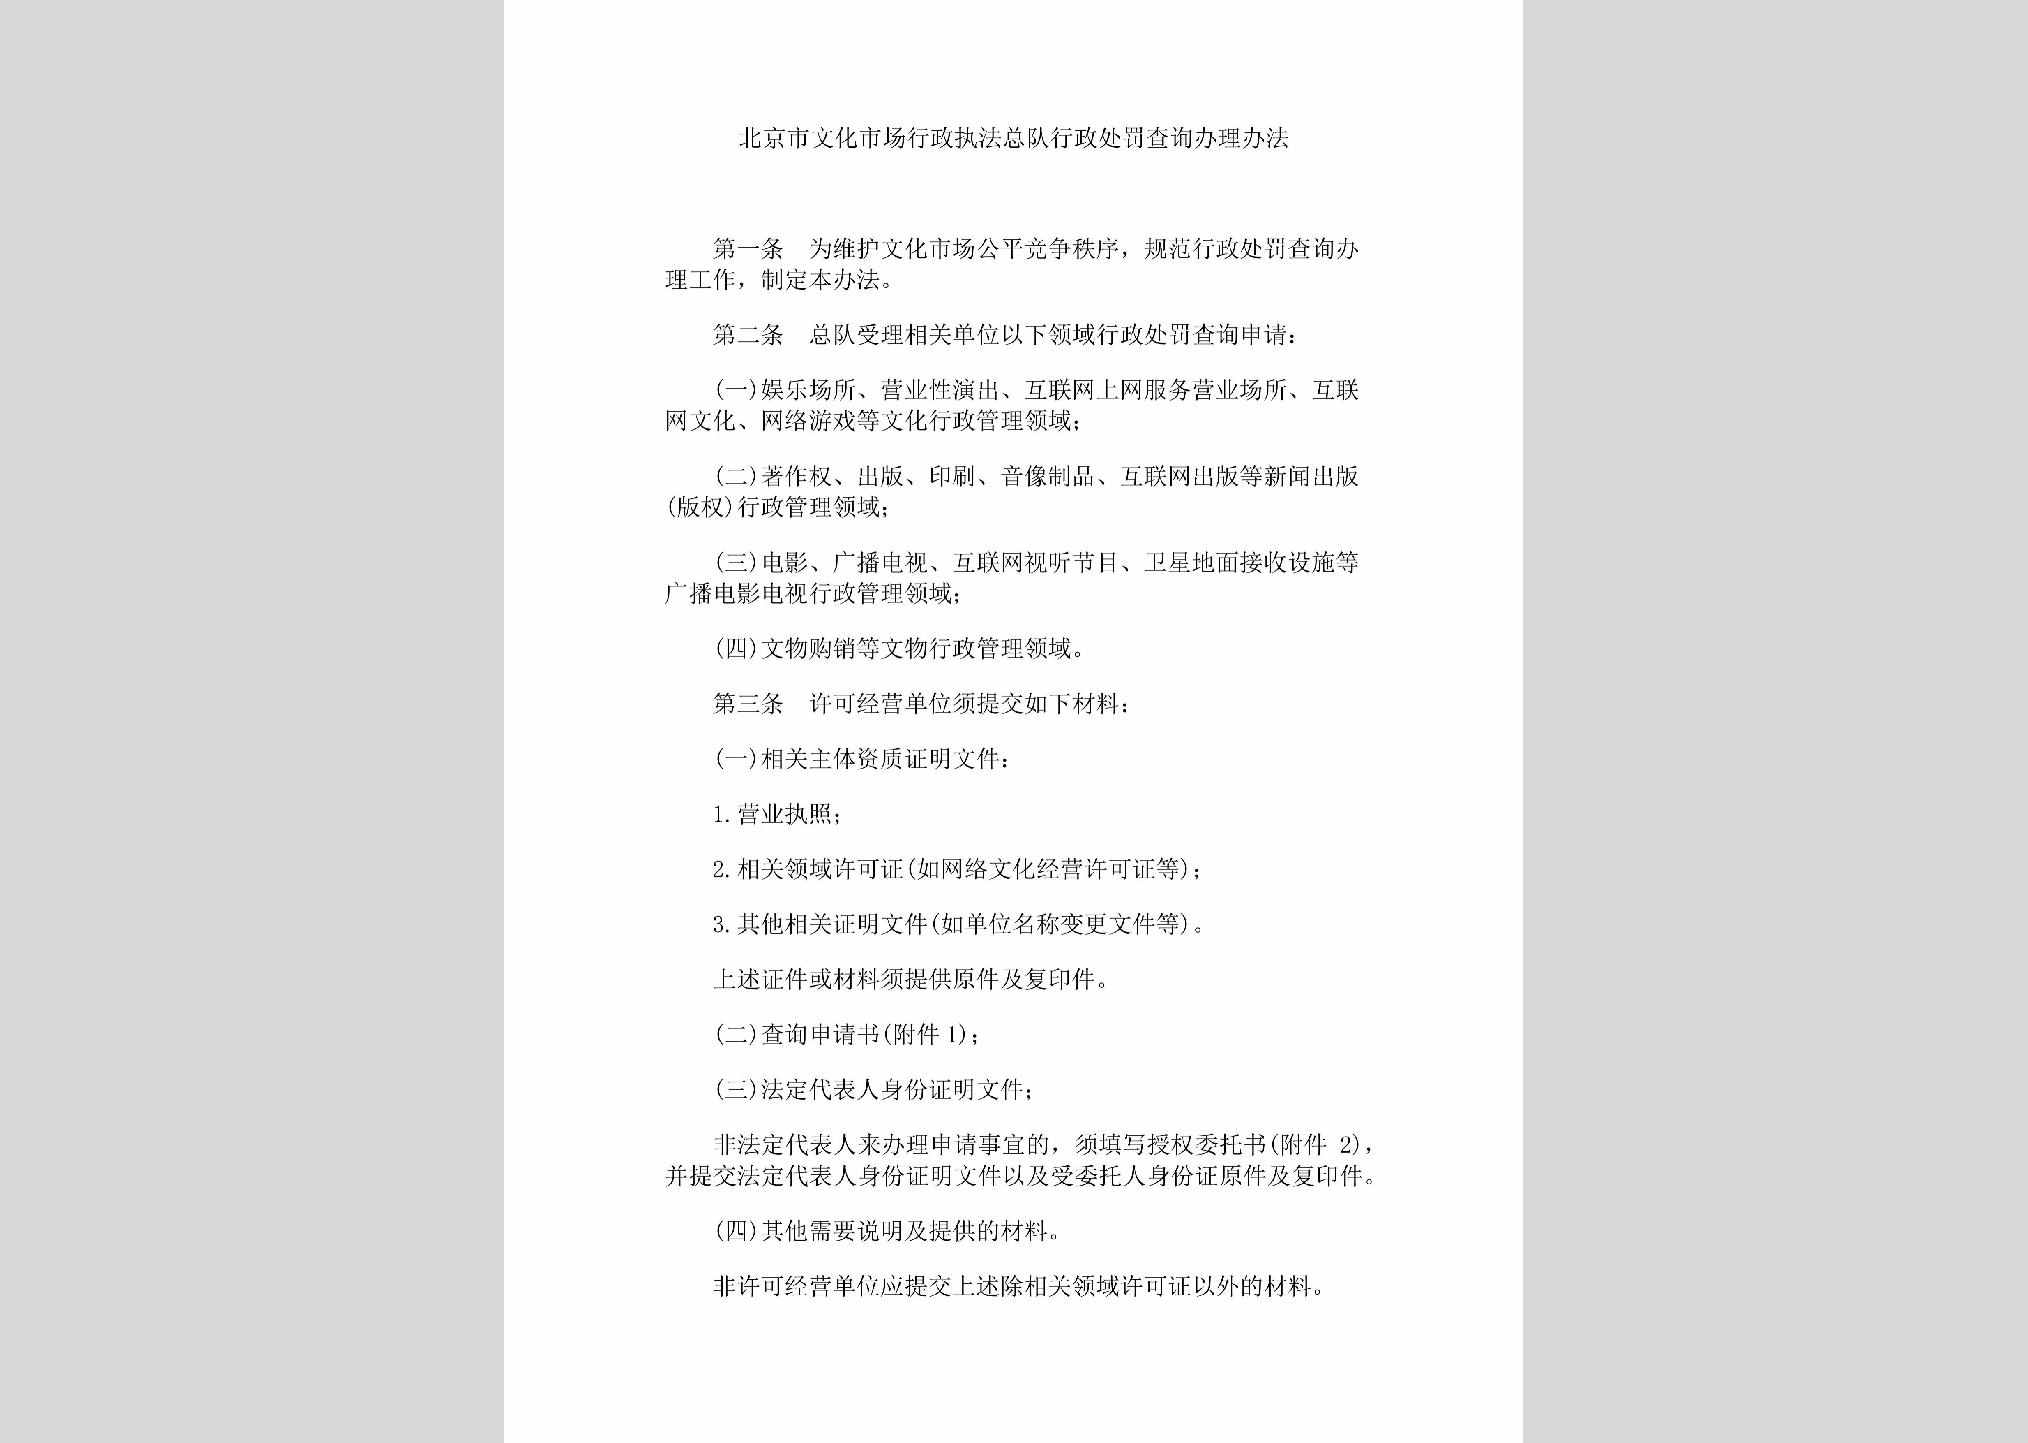 BJ-WHZBCFBF-2018：北京市文化市场行政执法总队行政处罚查询办理办法